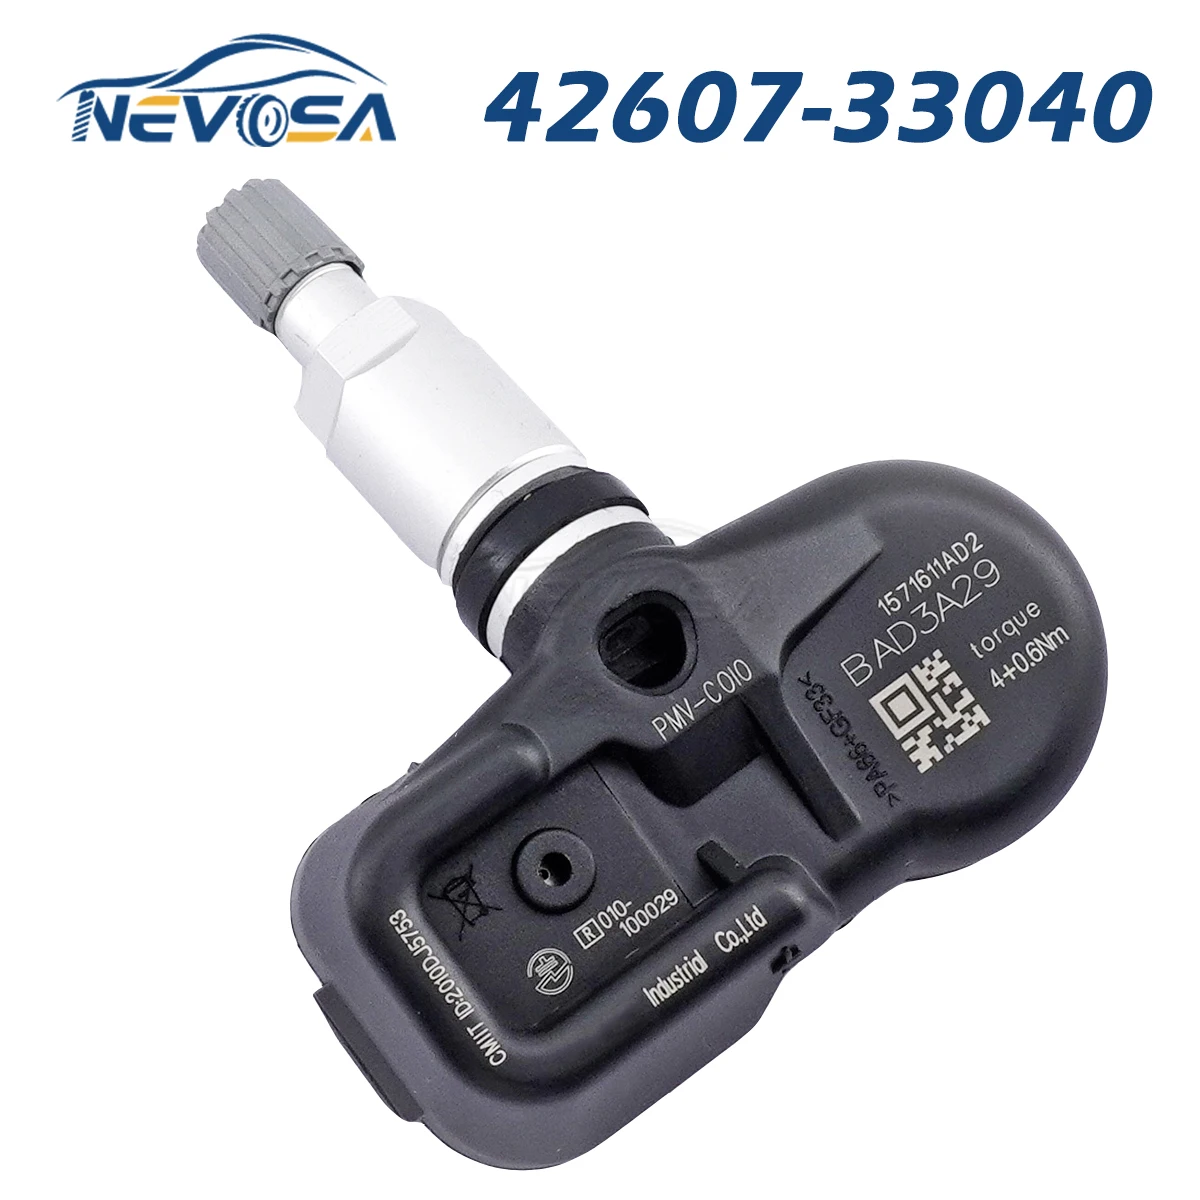 

Nevosa 42607-33040 TPMS Sensor For Toyota Camry Corolla Avalon Prius V Lexus NX300h ES350 Scion iM 315MHz 42607-06020 SU00306090